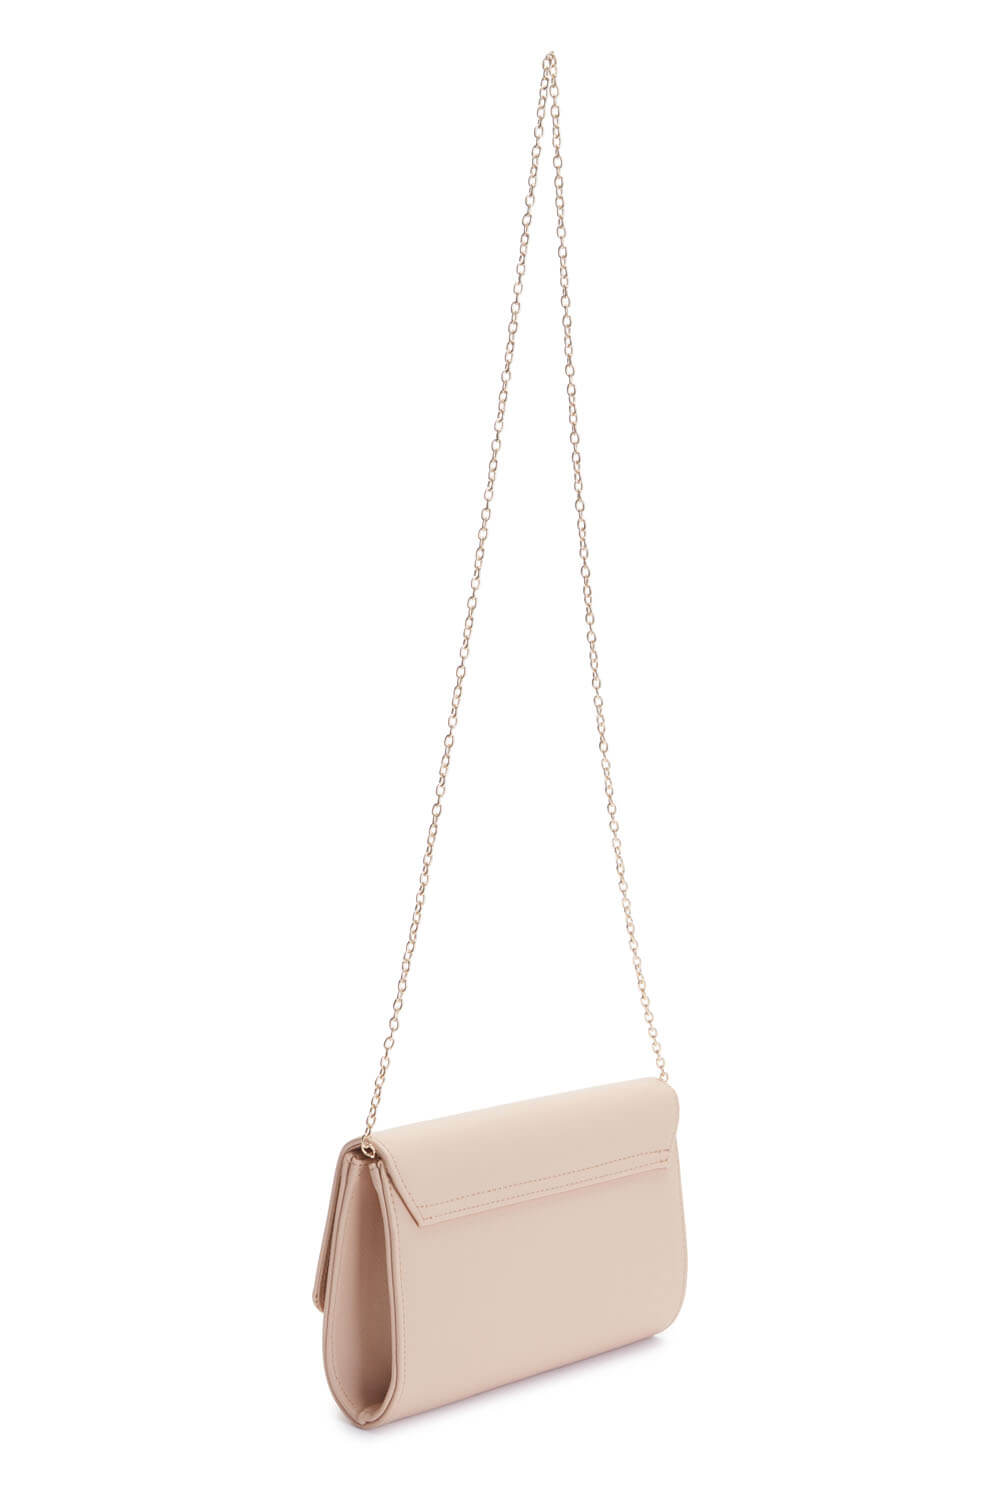 Light Pink Foldover Metal Bar Clutch Bag, Image 3 of 4